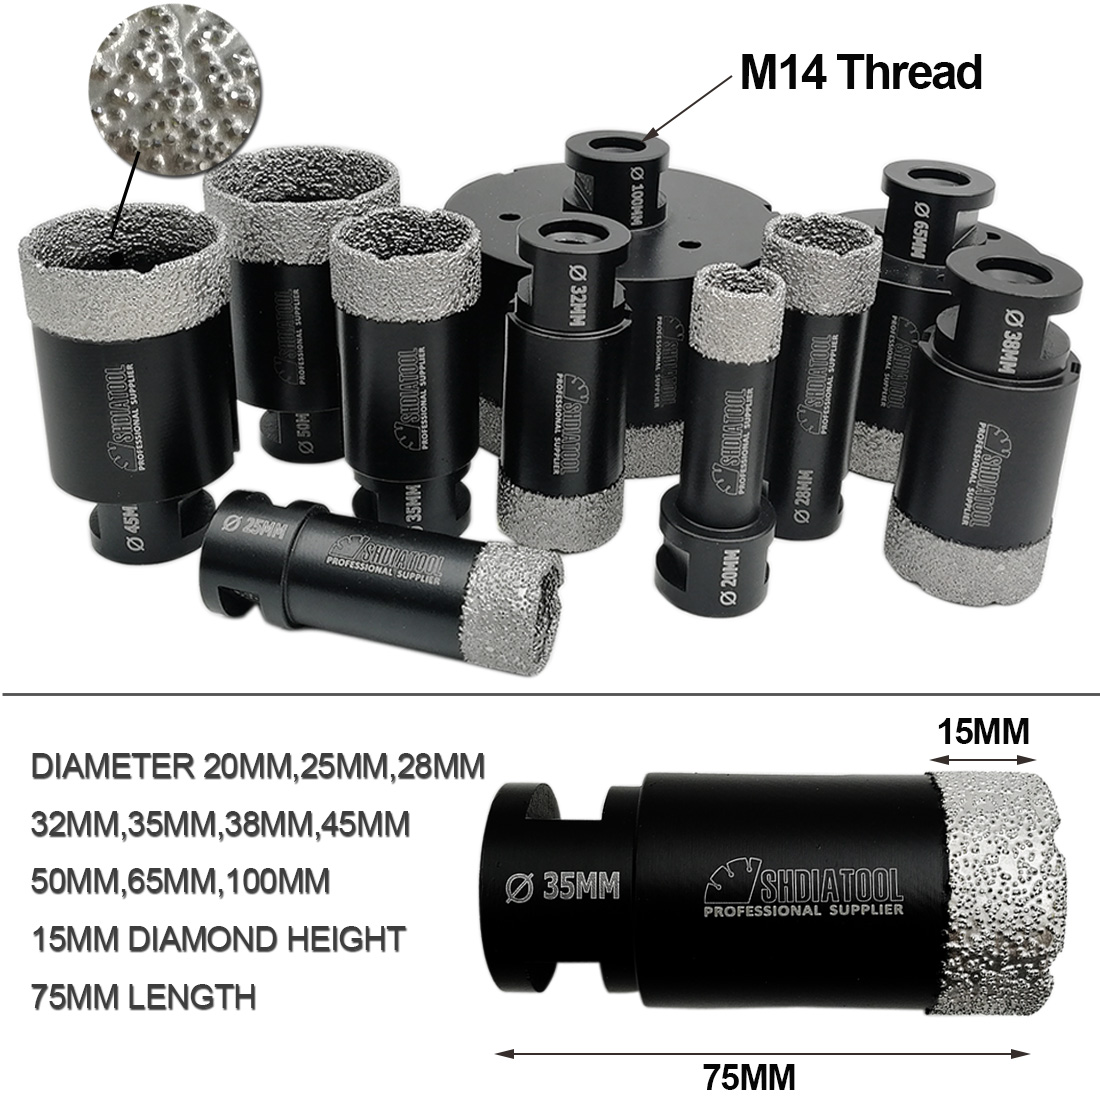 SHDIATOOL 1pc M14 Thread Vacuum Brazed Diamond Dry Drilling Core Bit Drilling Bit 75mm Length Hole Saw For Porcelain Tile Stone